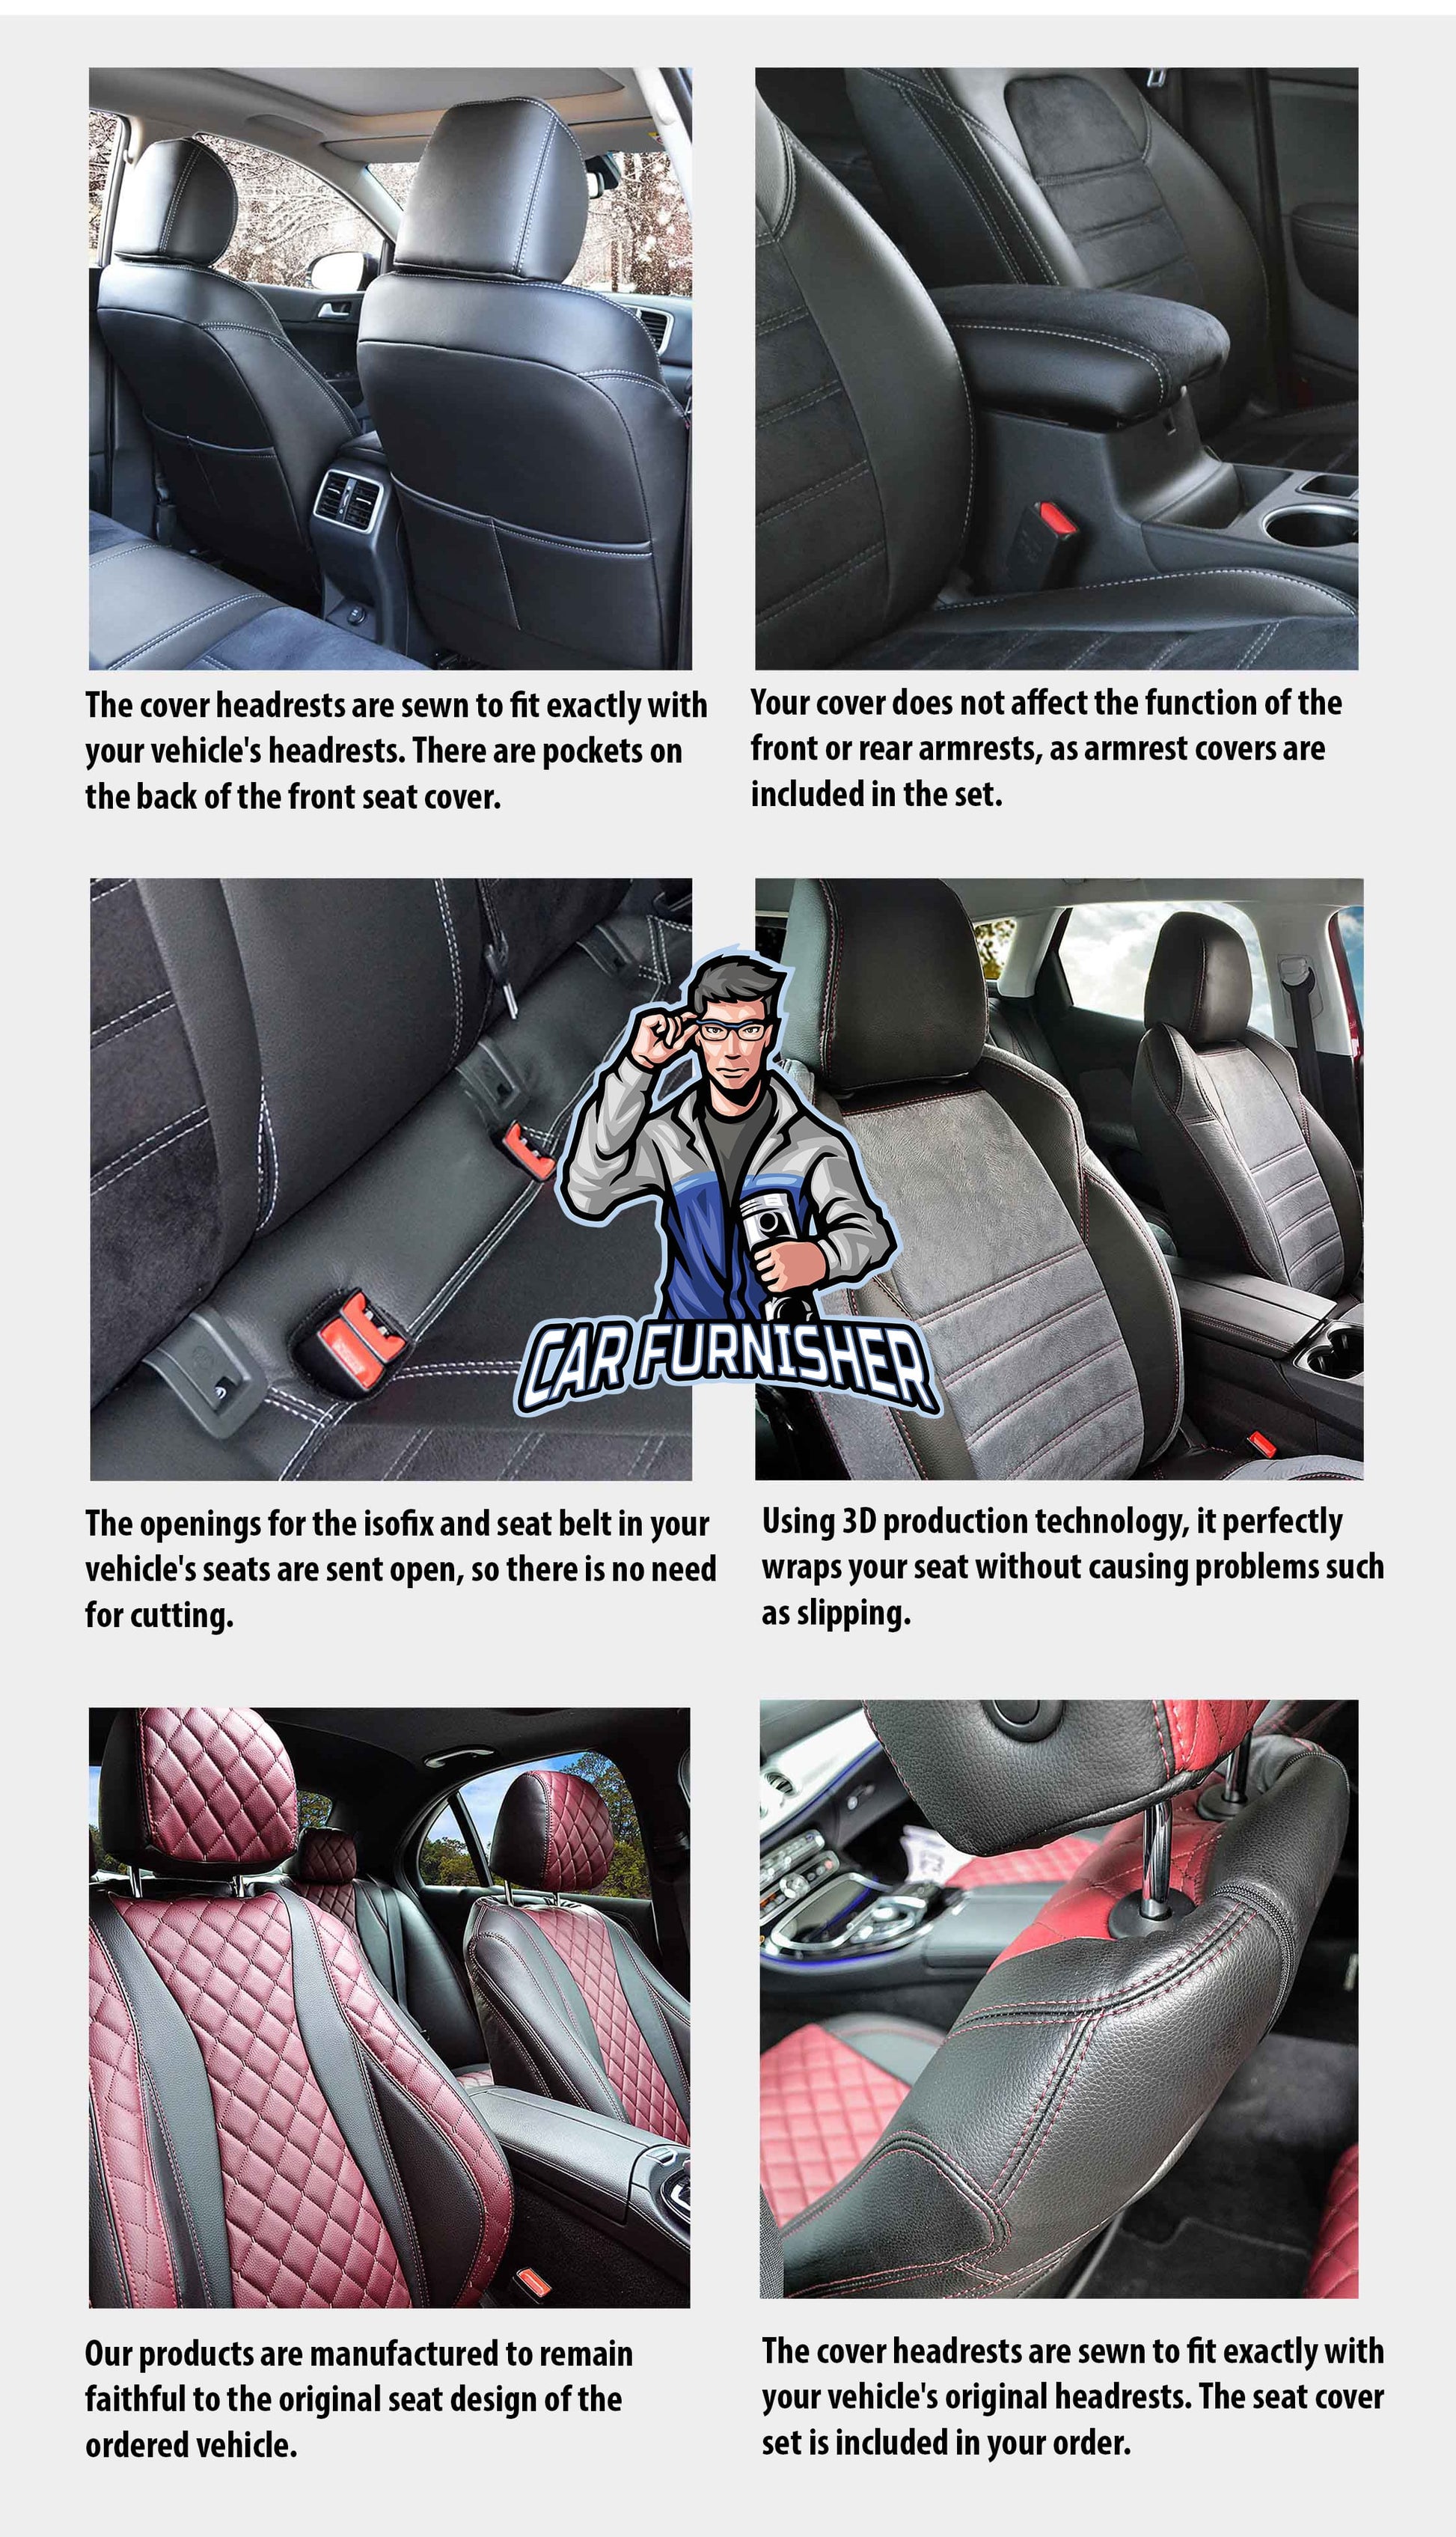 Chevrolet Cruze Seat Covers Original Jacquard Design Smoked Jacquard Fabric